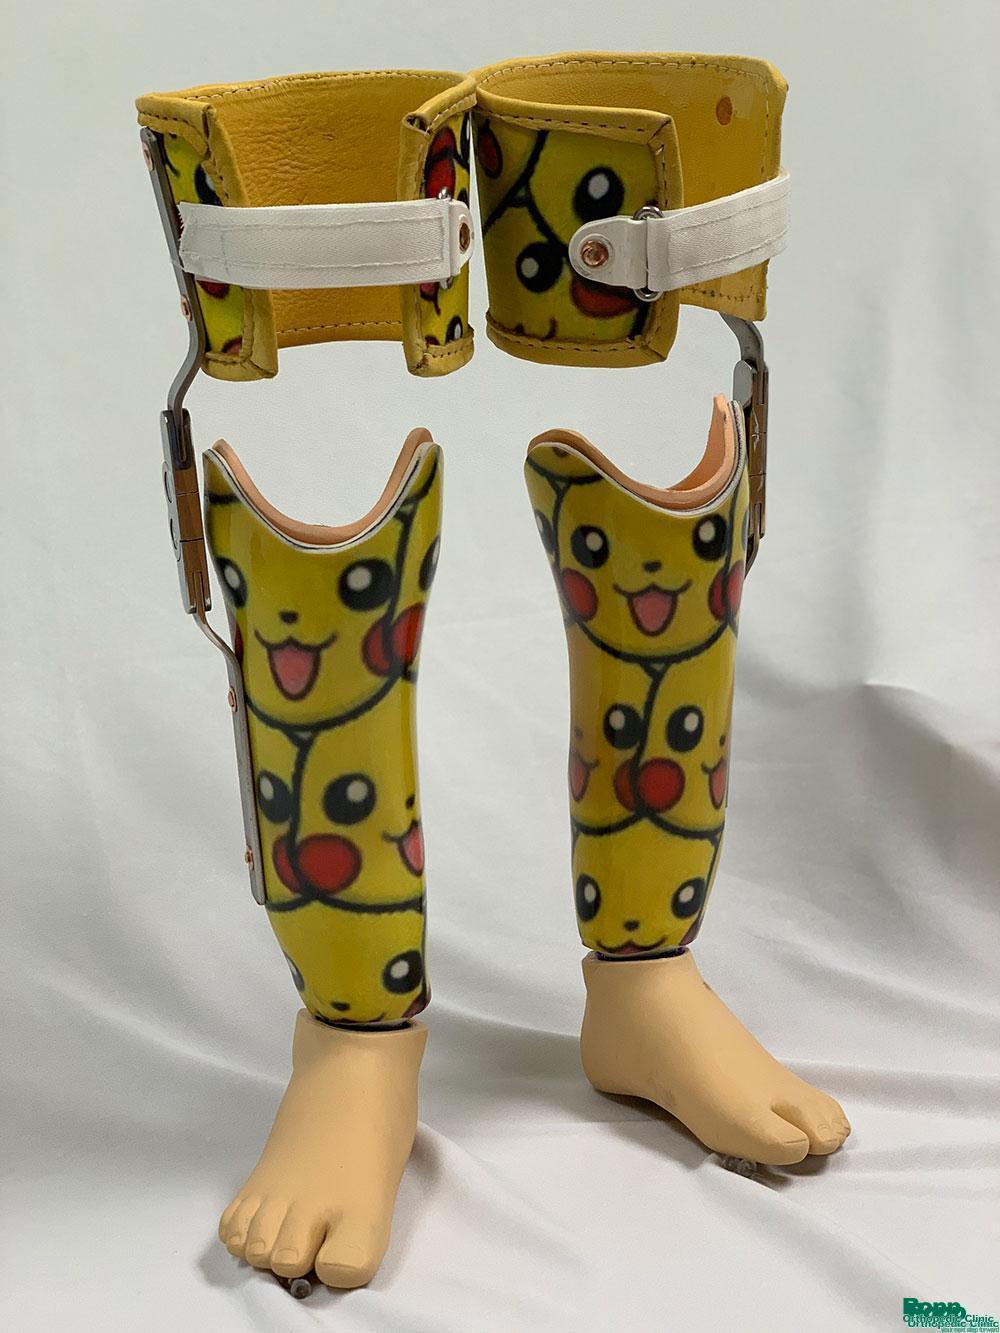 Pikachu sockets designed for our Pokemon Lover!